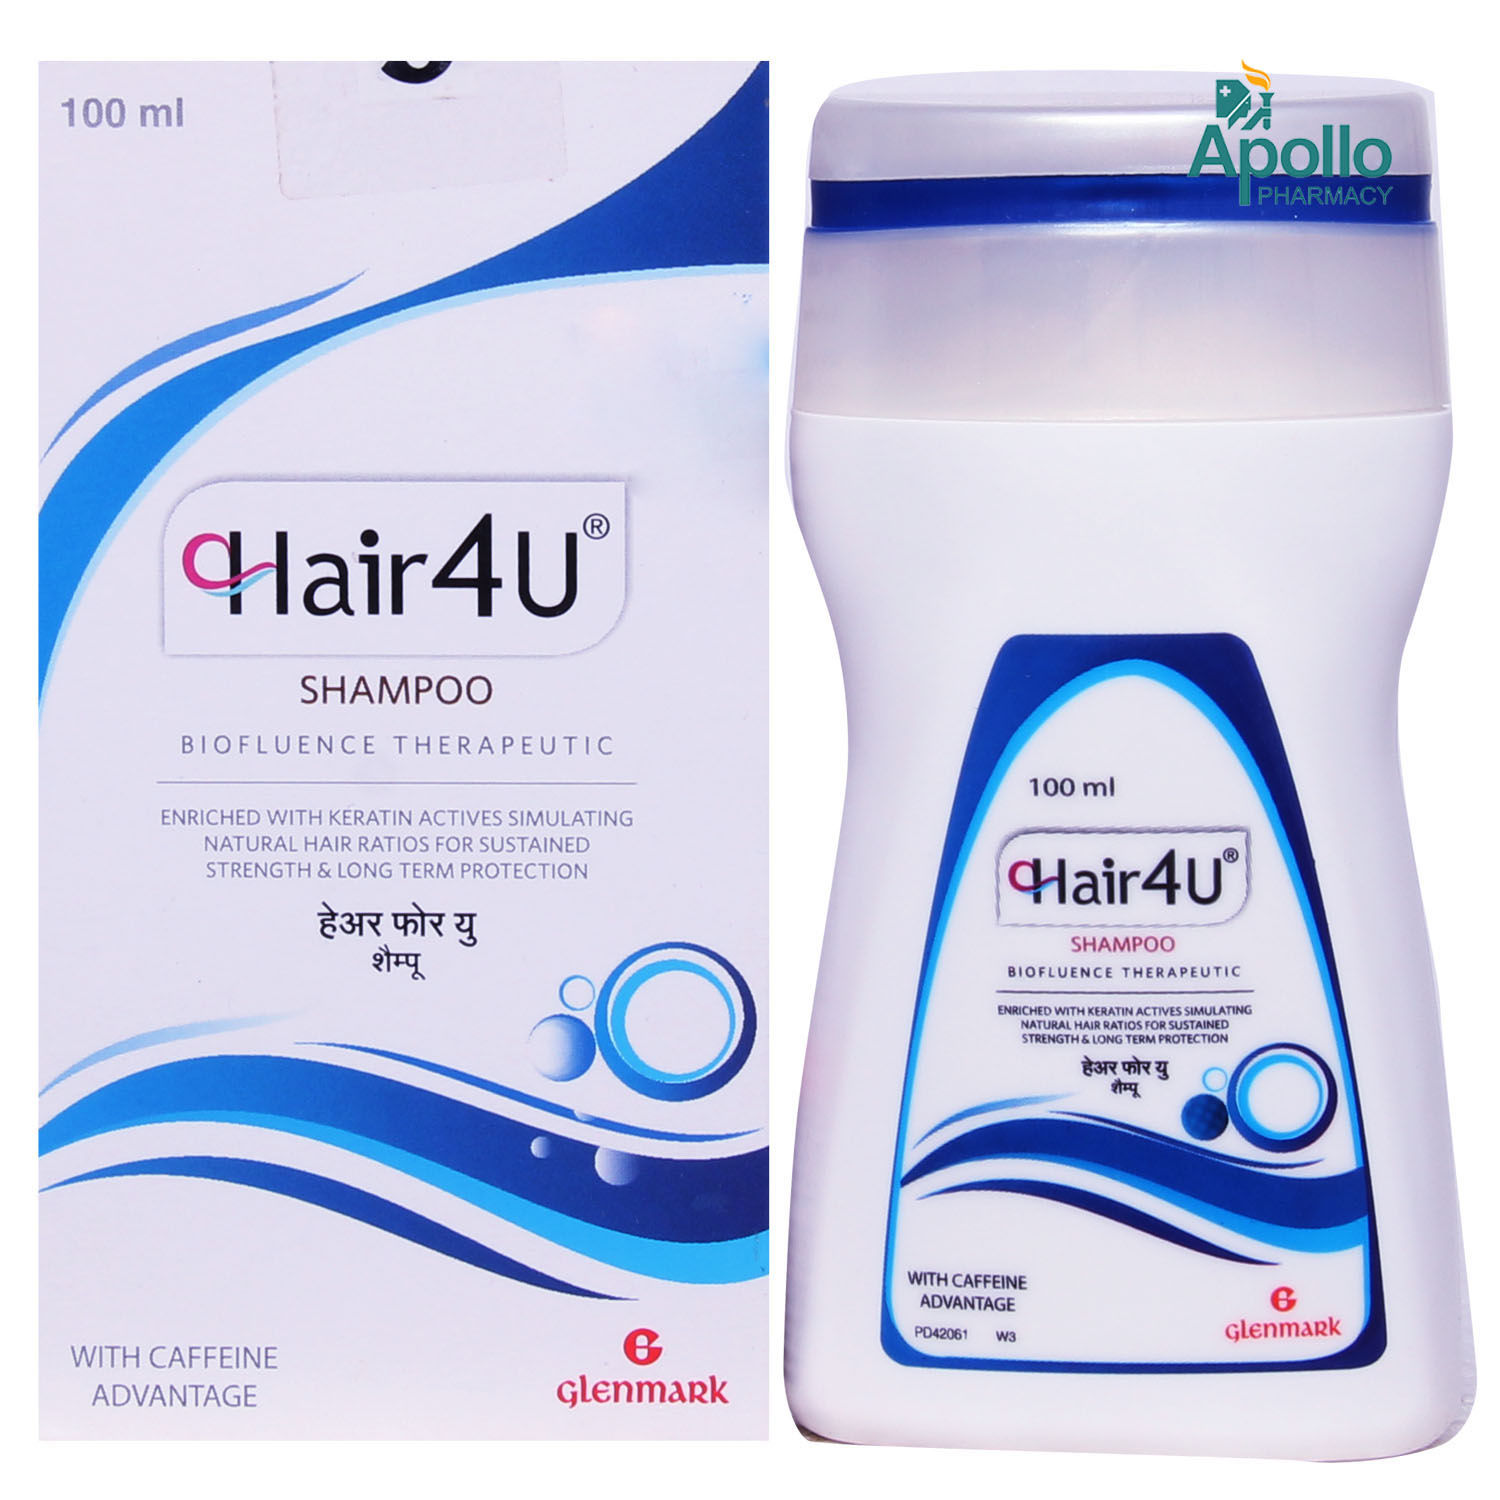 Hair 4U Shampoo, 100 ml Price, Uses, Side Effects, Composition - Apollo  Pharmacy